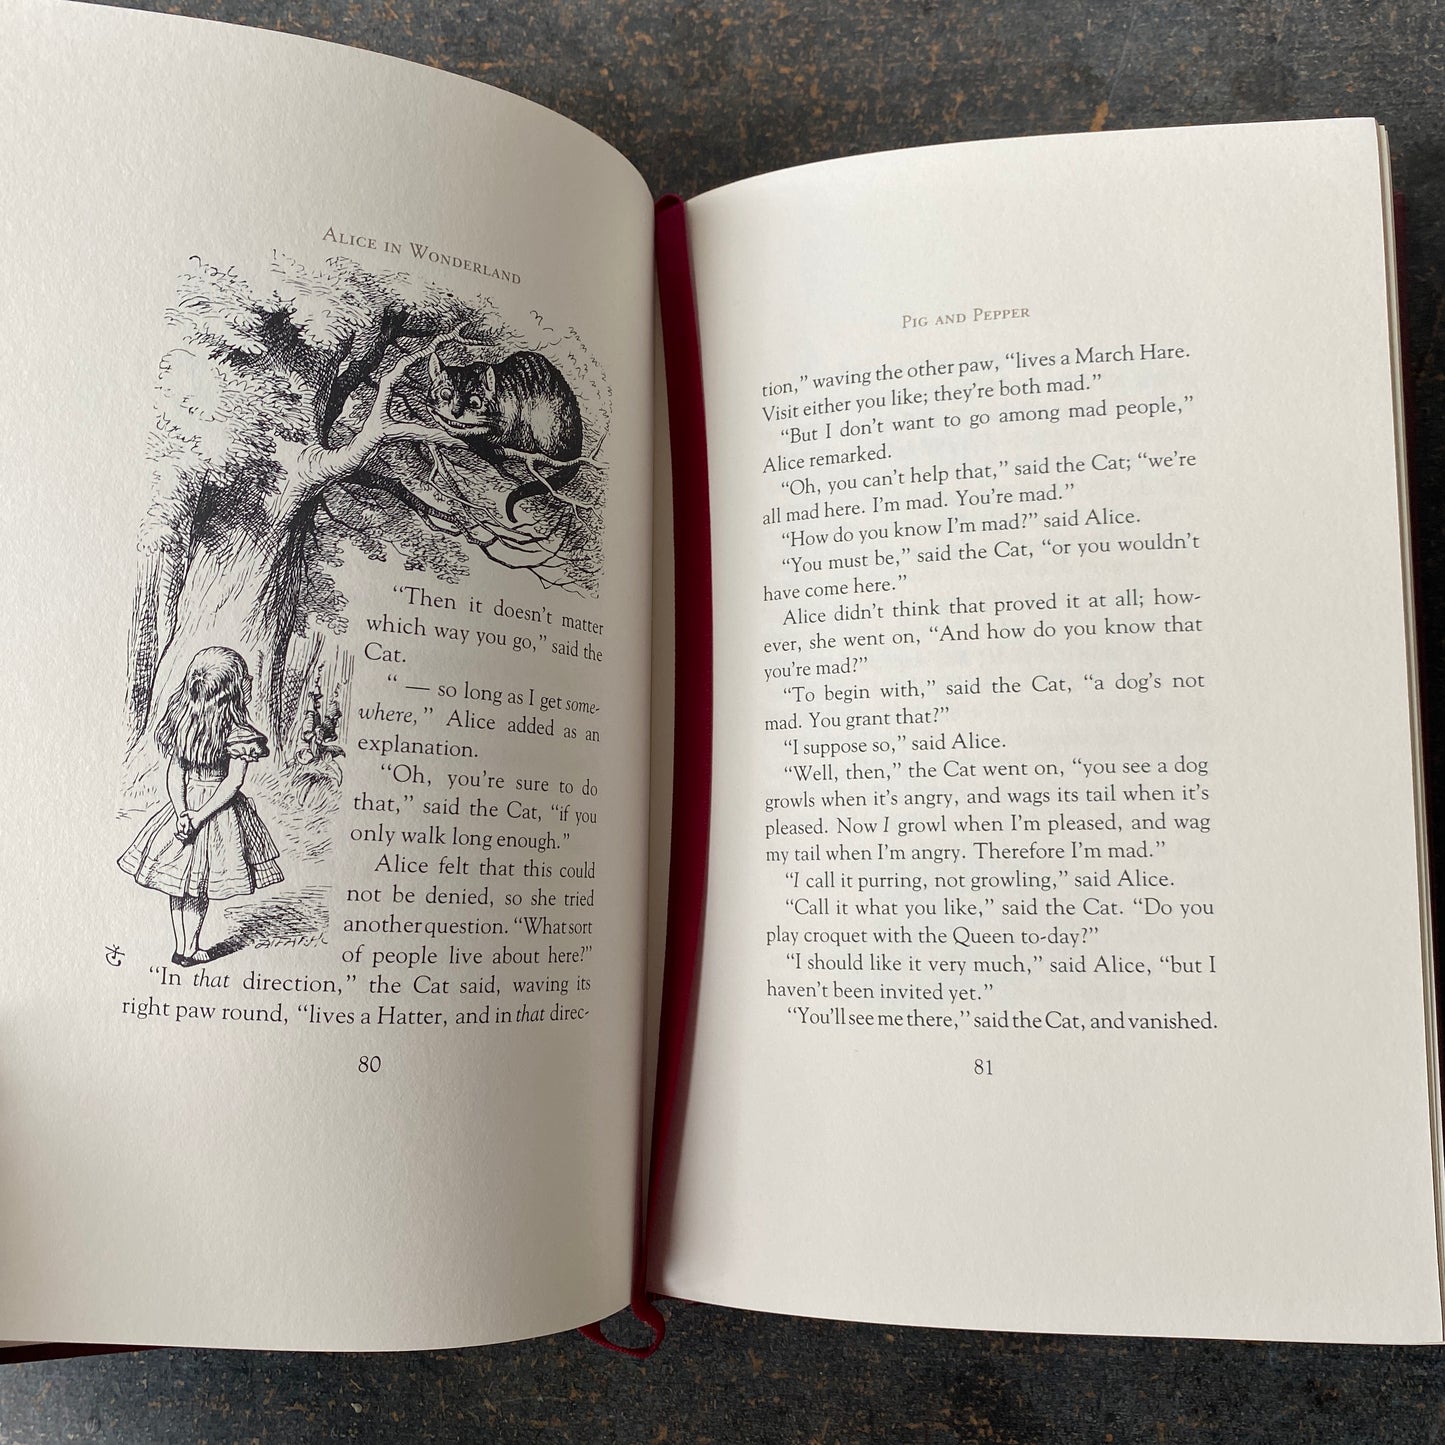 Vintage Alice’s Adventures in Wonderland book, The Franklin Library